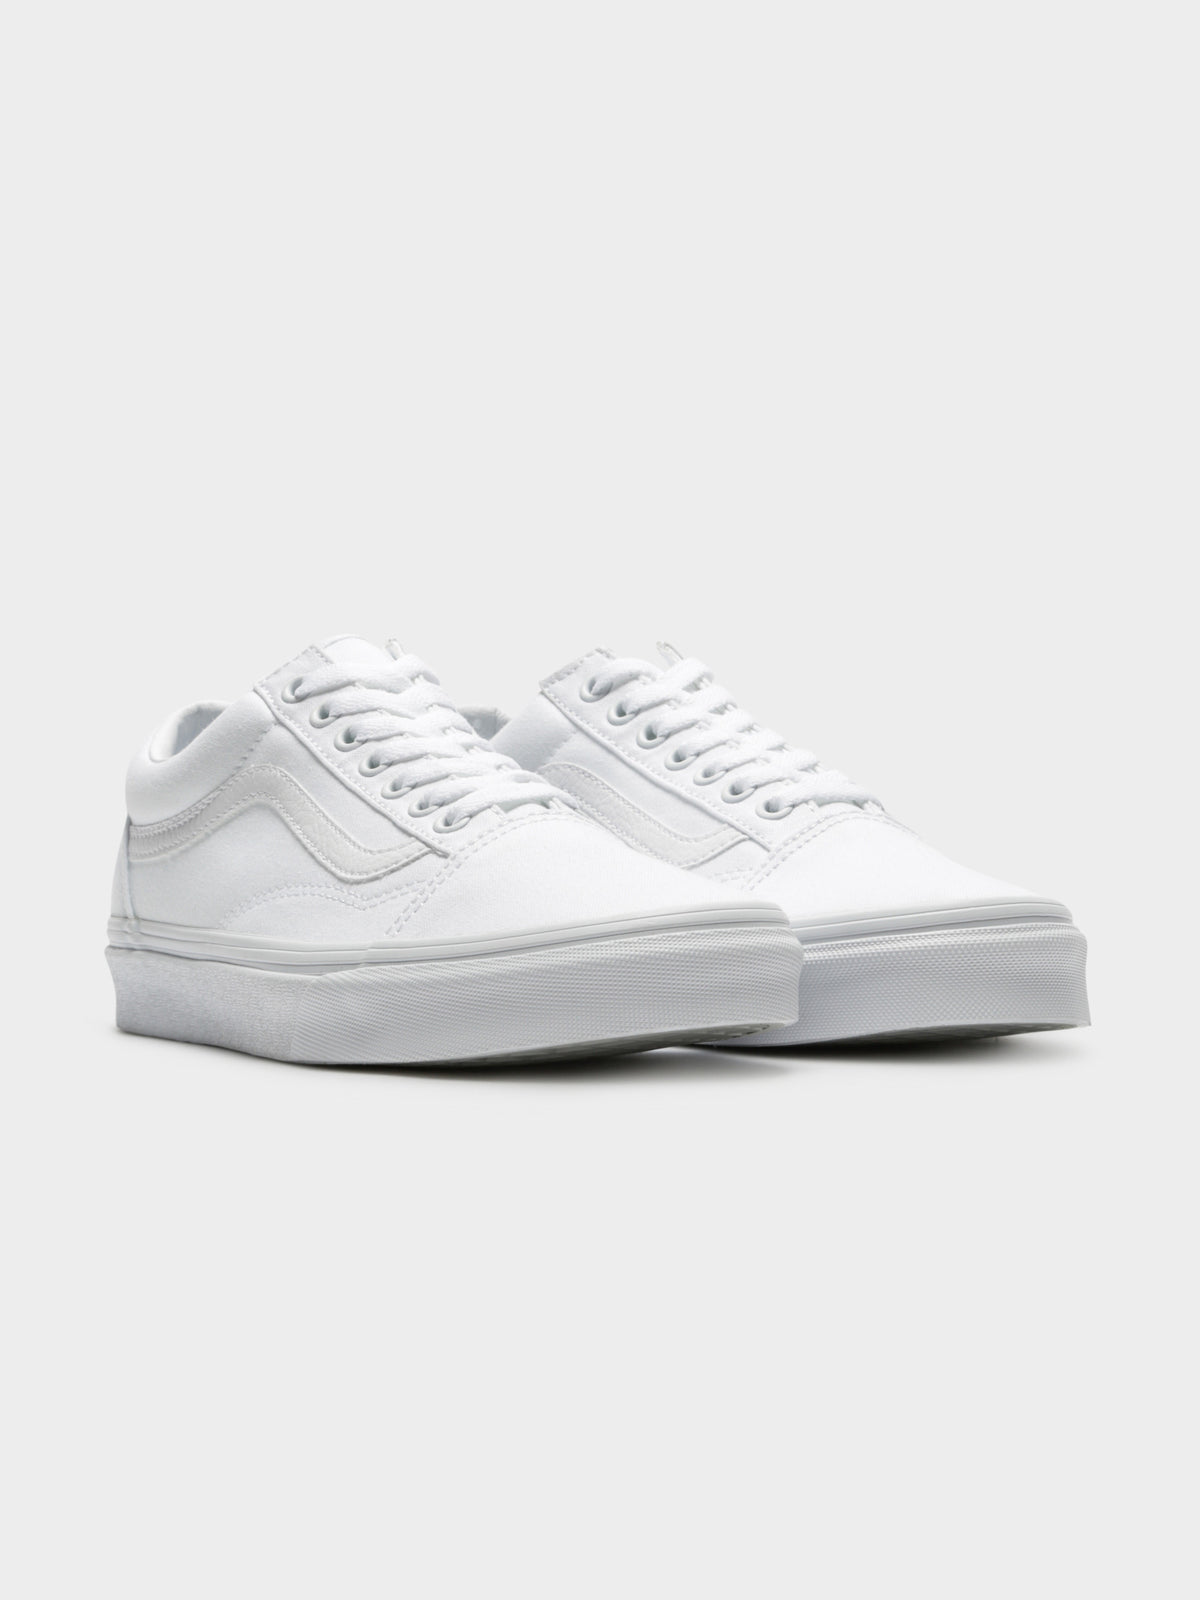 Unisex Old Skool Sneaker in White